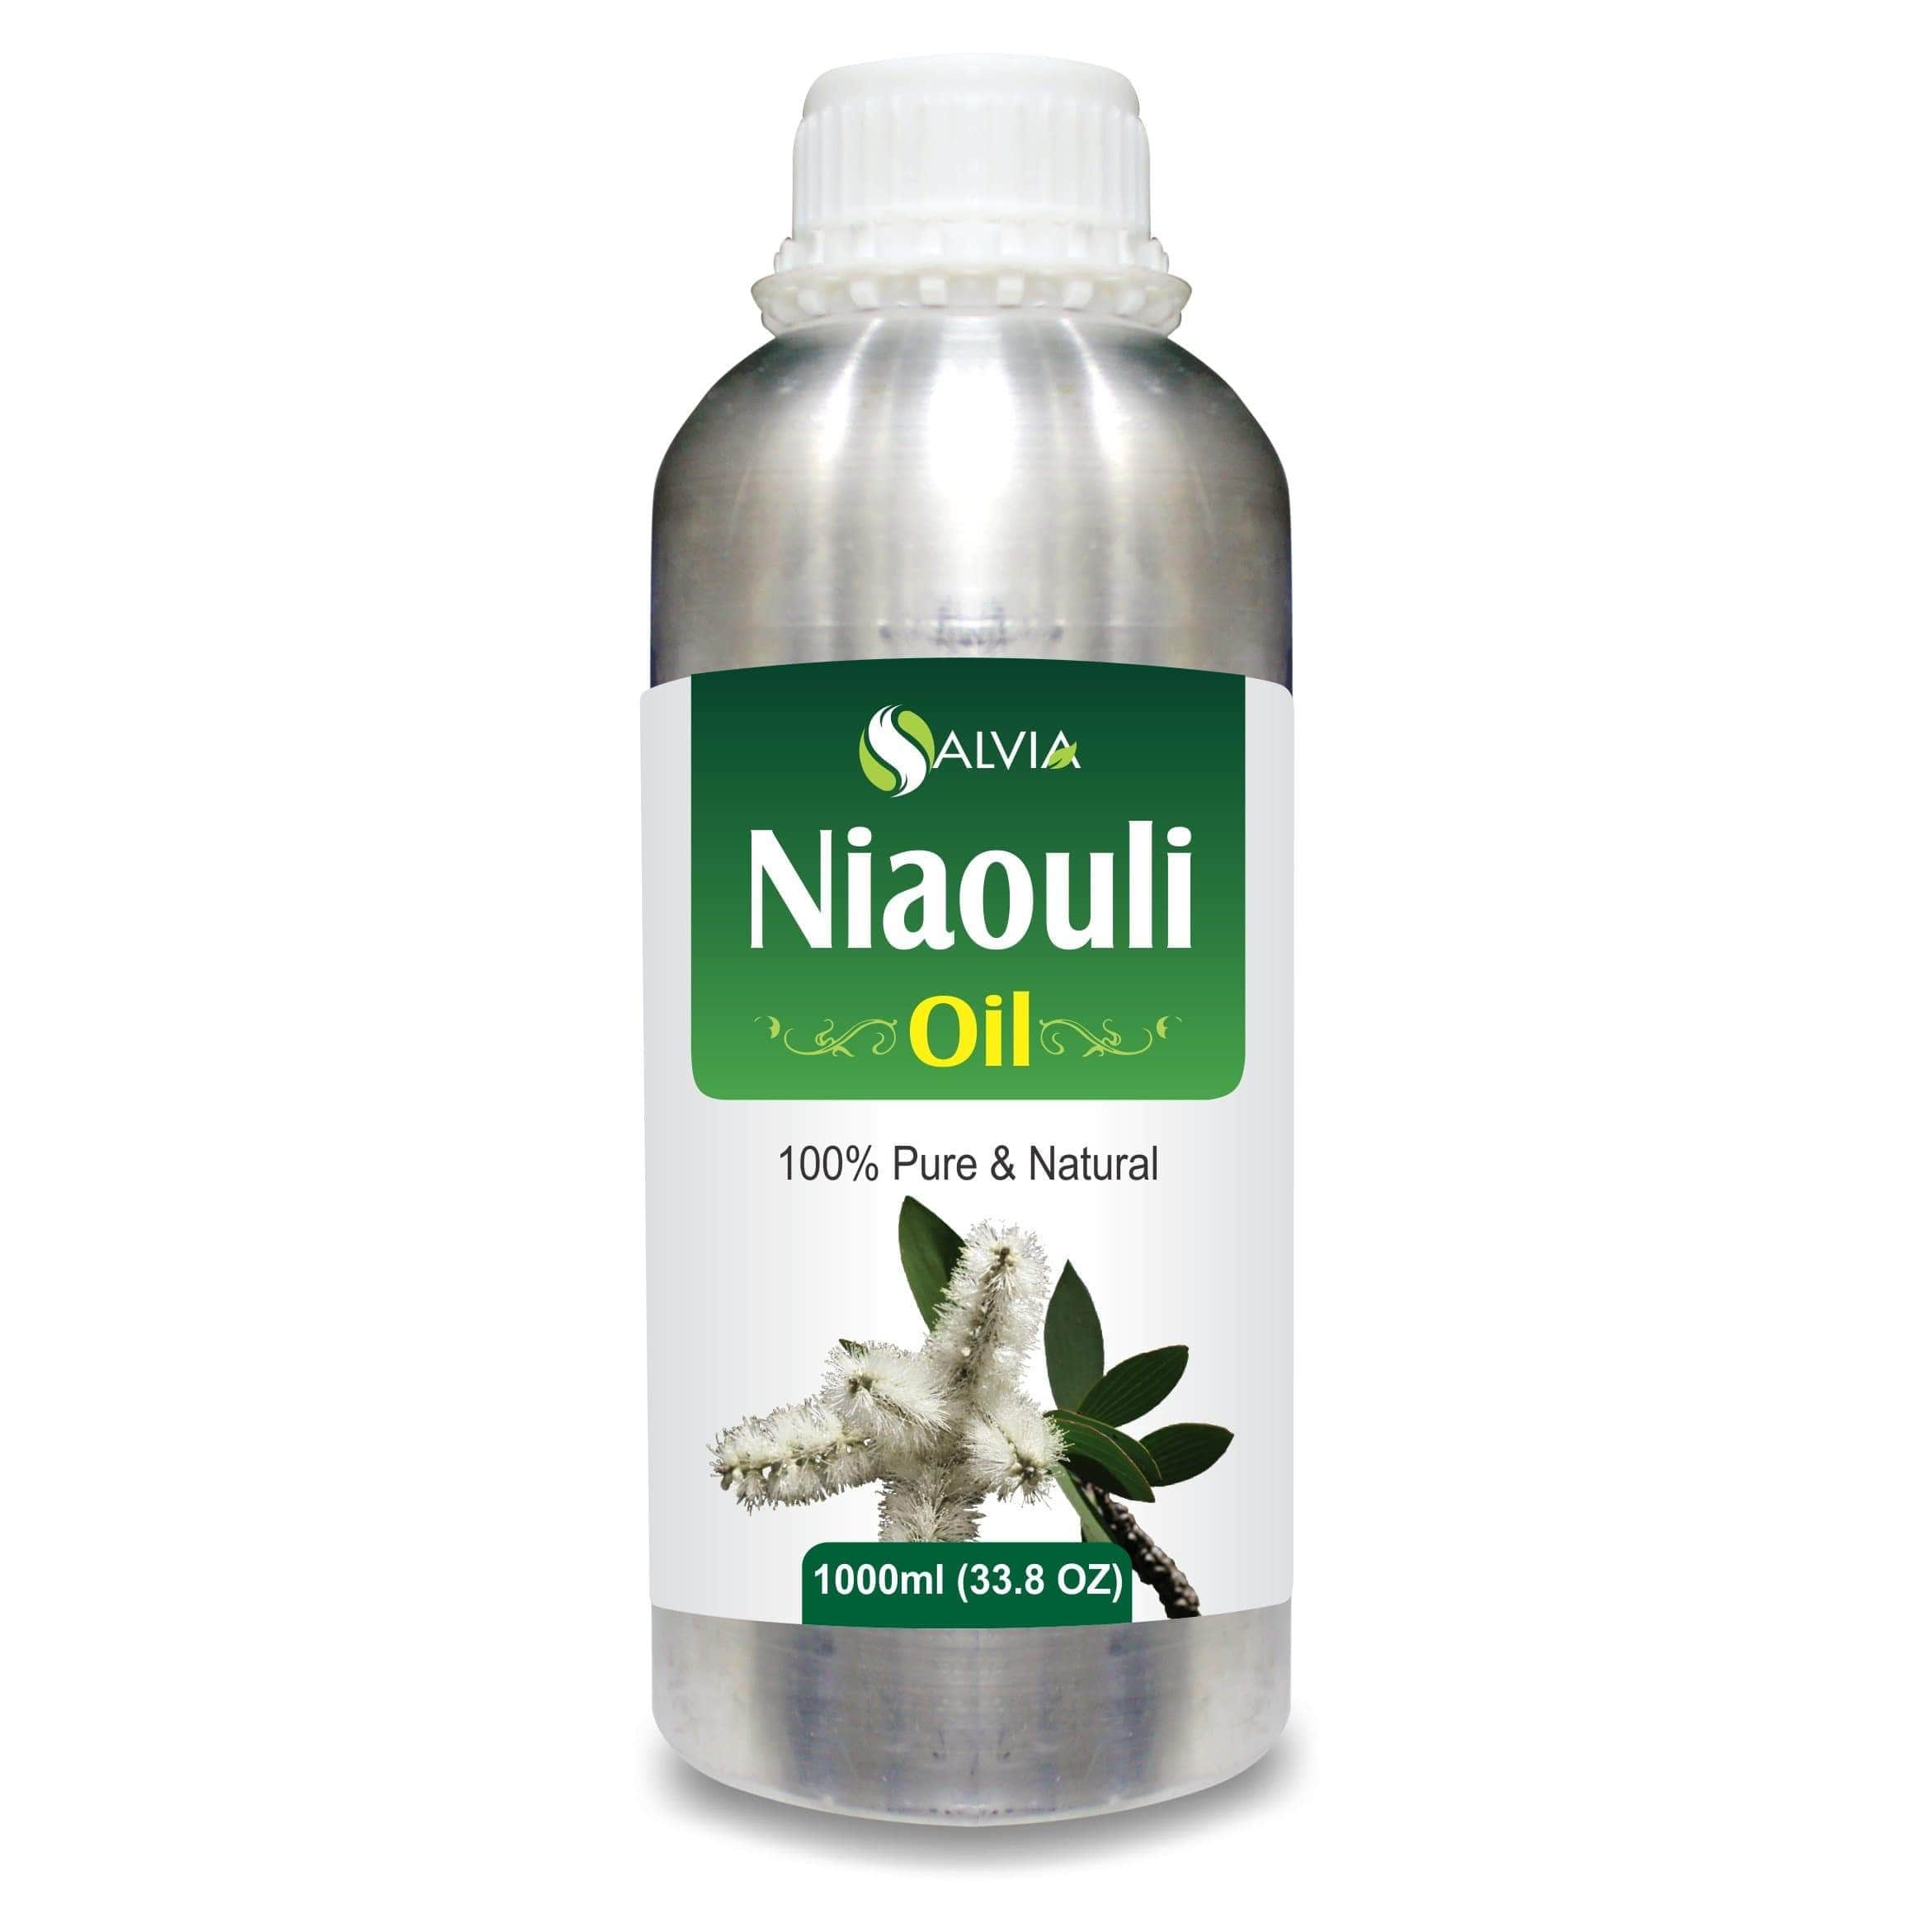 niaouli oil skin benefits